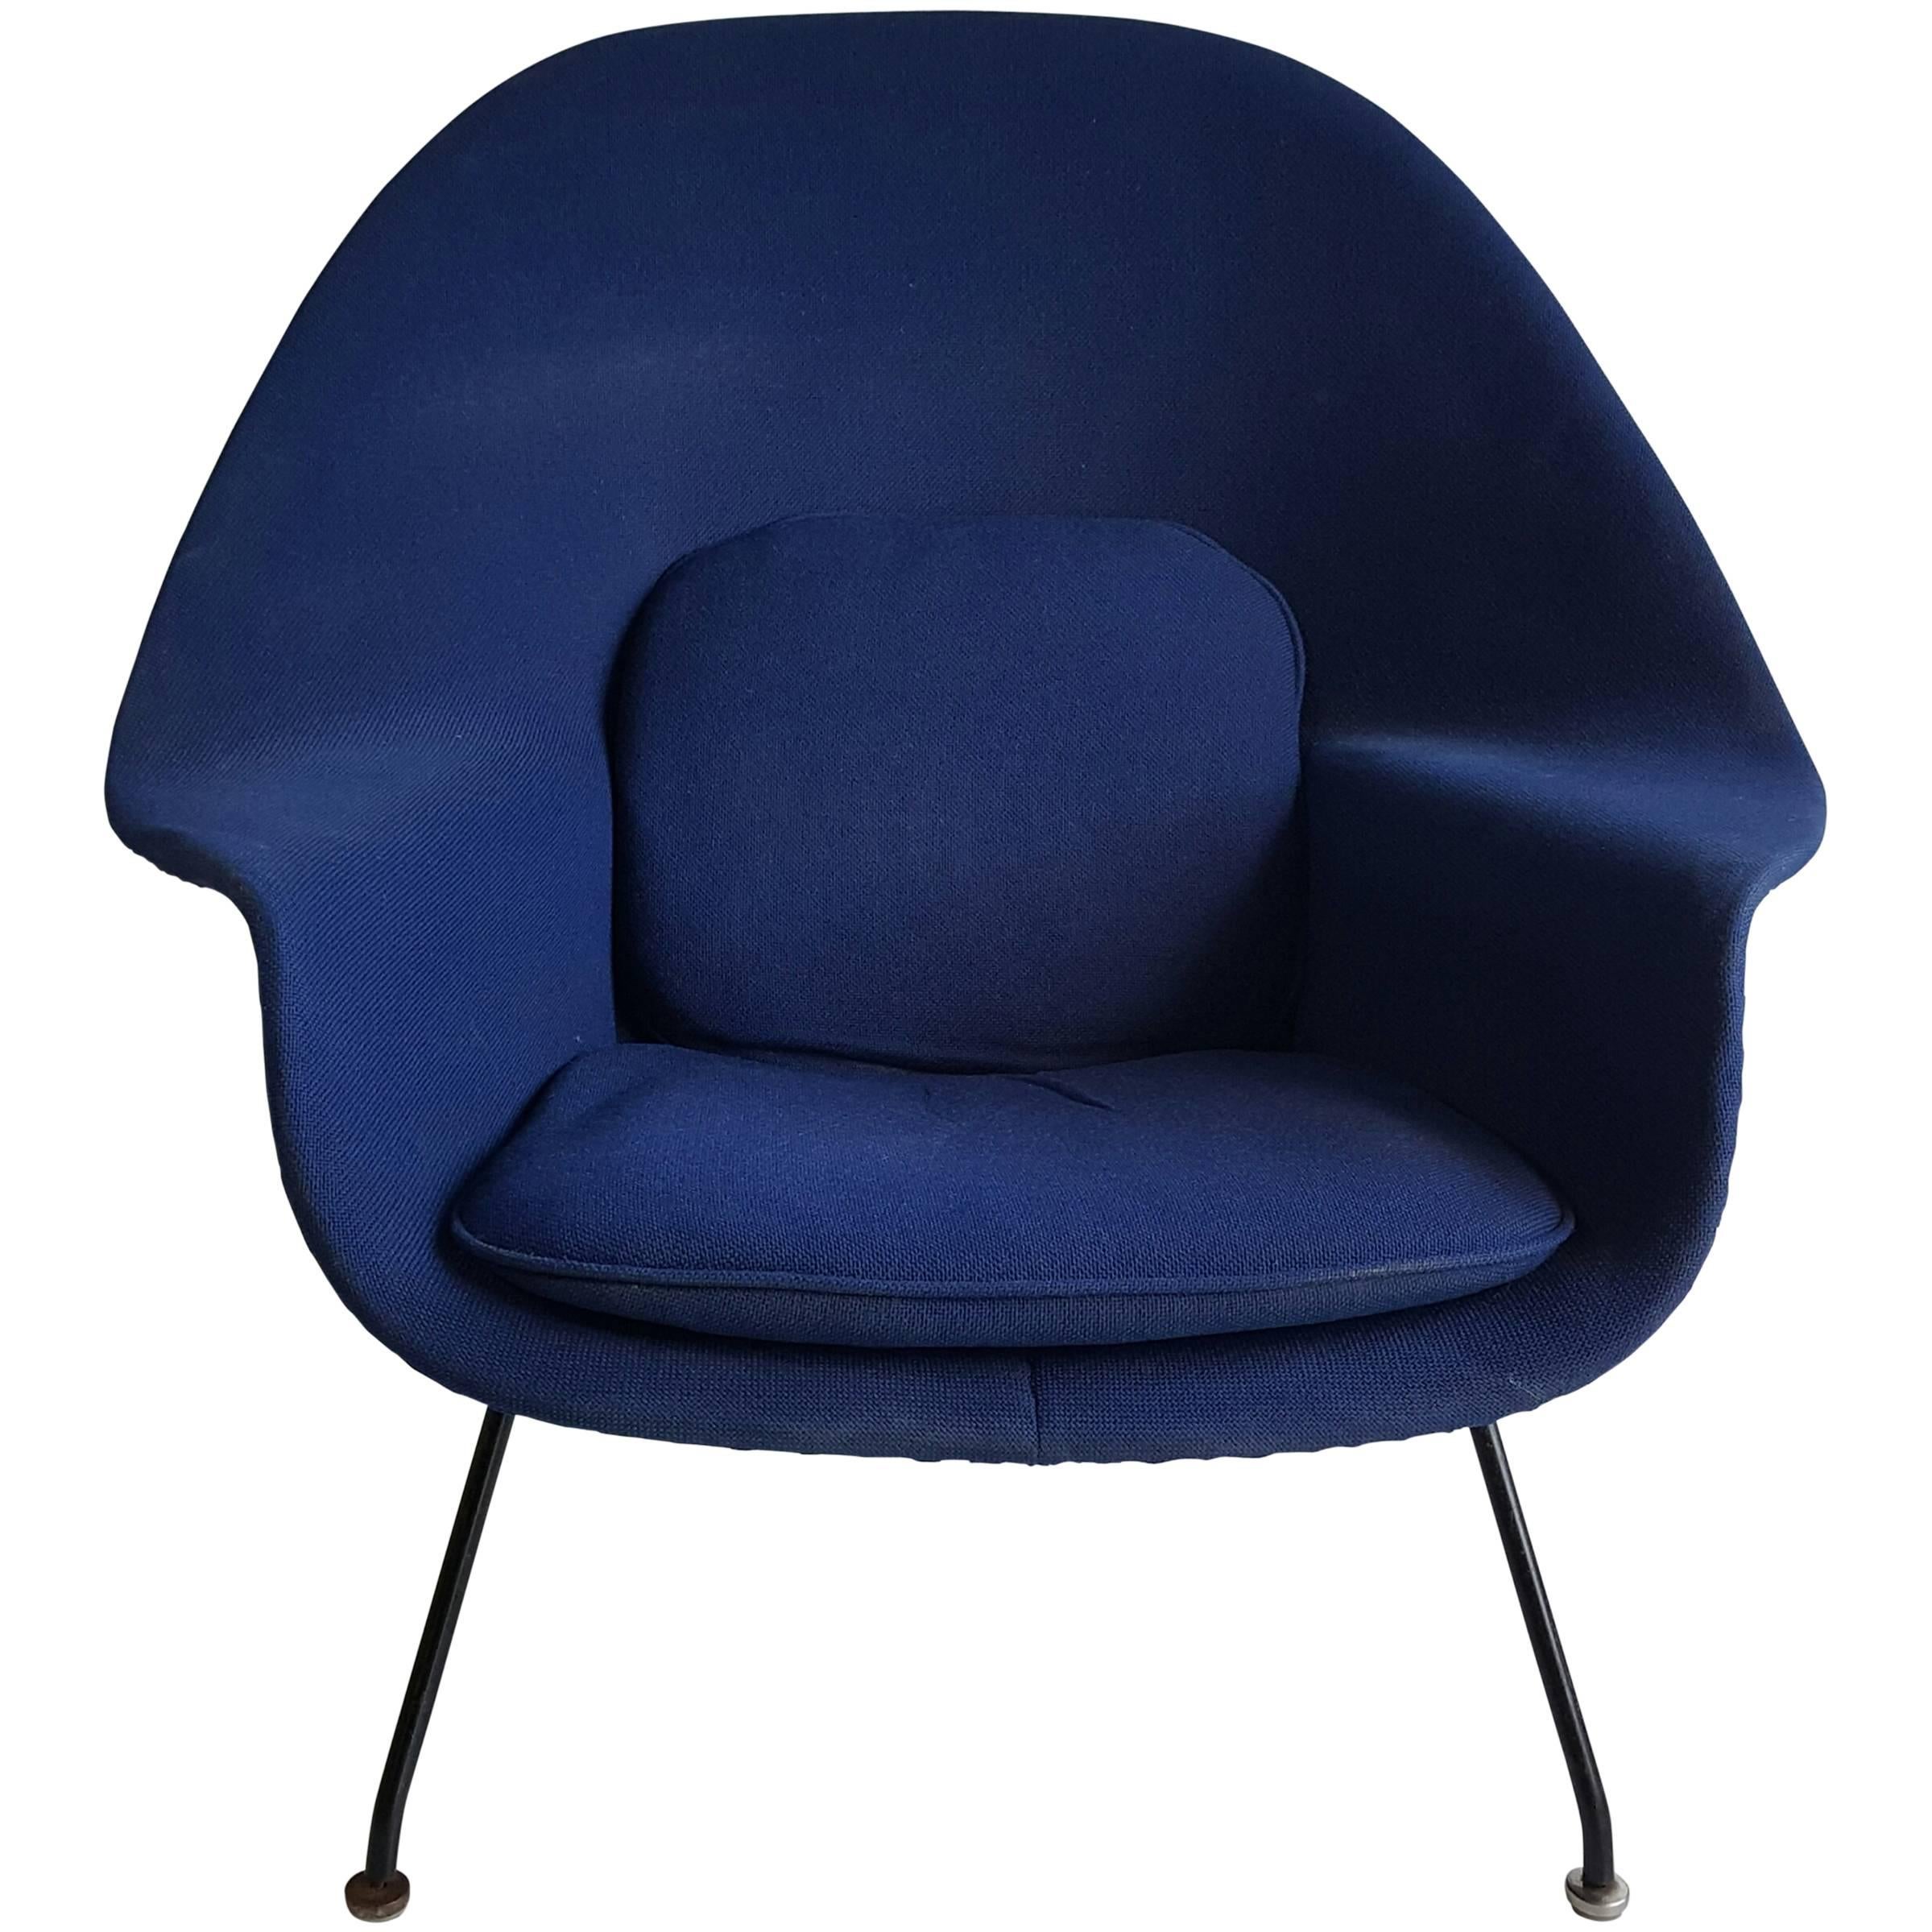 Classic Mid-Century Modern Womb Chair by Eero Saarinen for Knoll